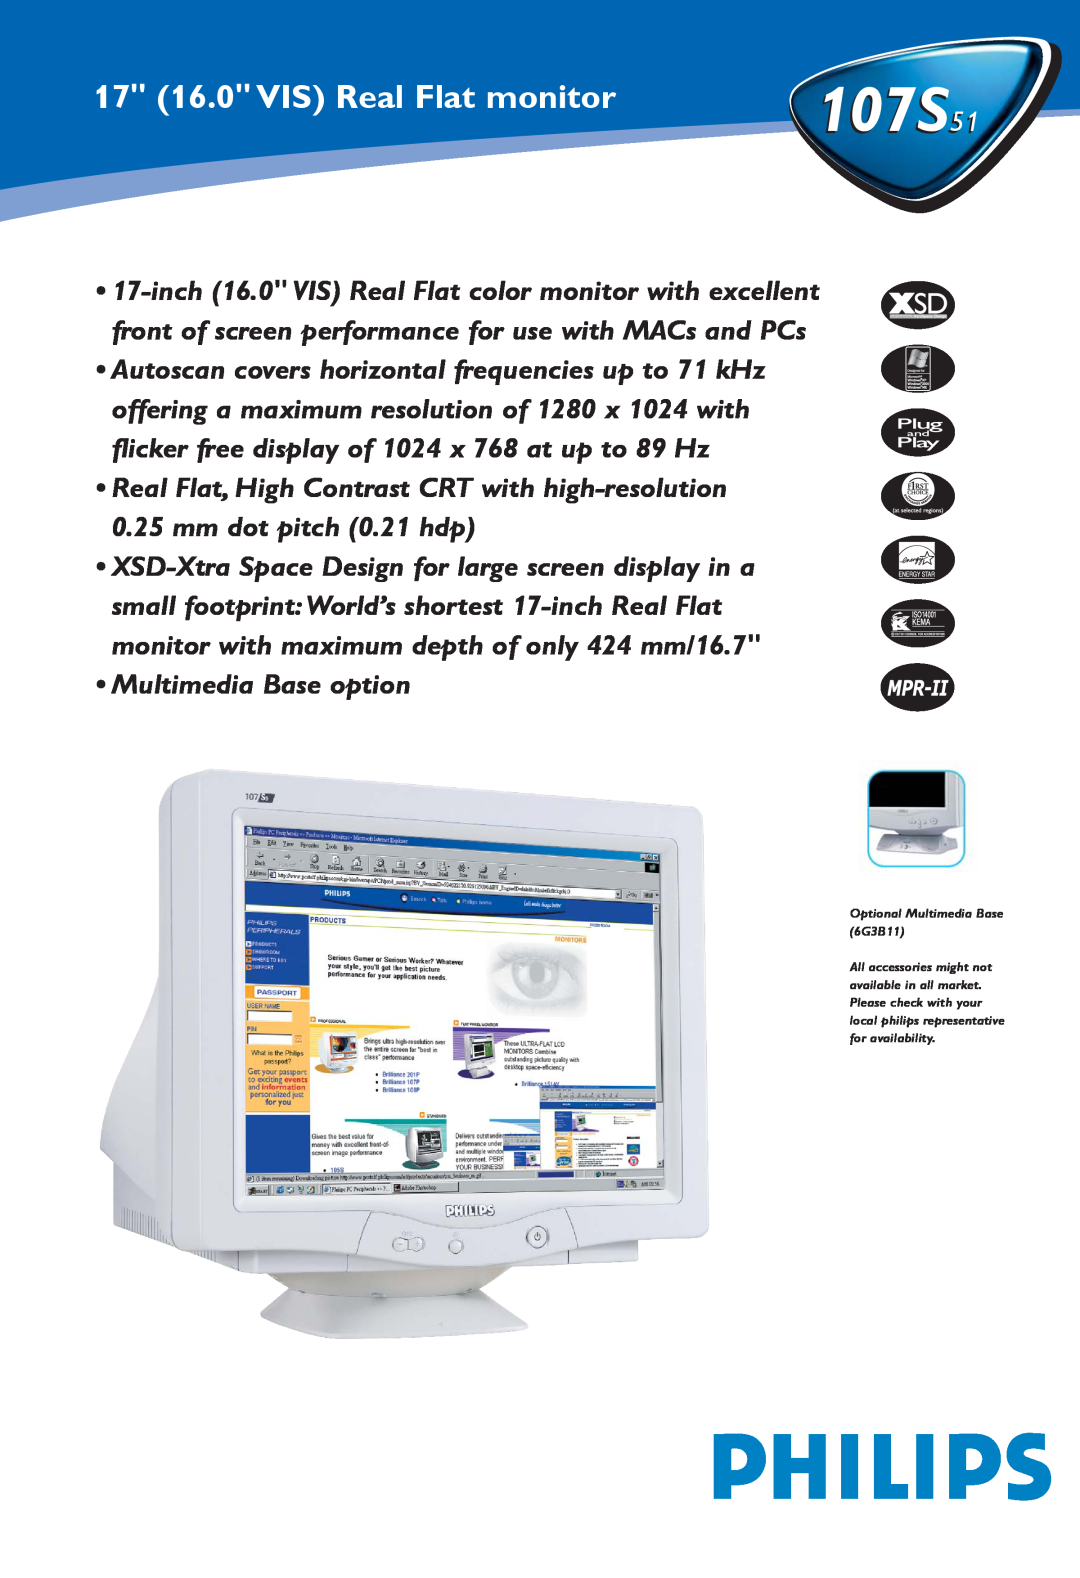 Philips 107S51 manual 17 16.0 VIS Real Flat monitor, Multimedia Base option 